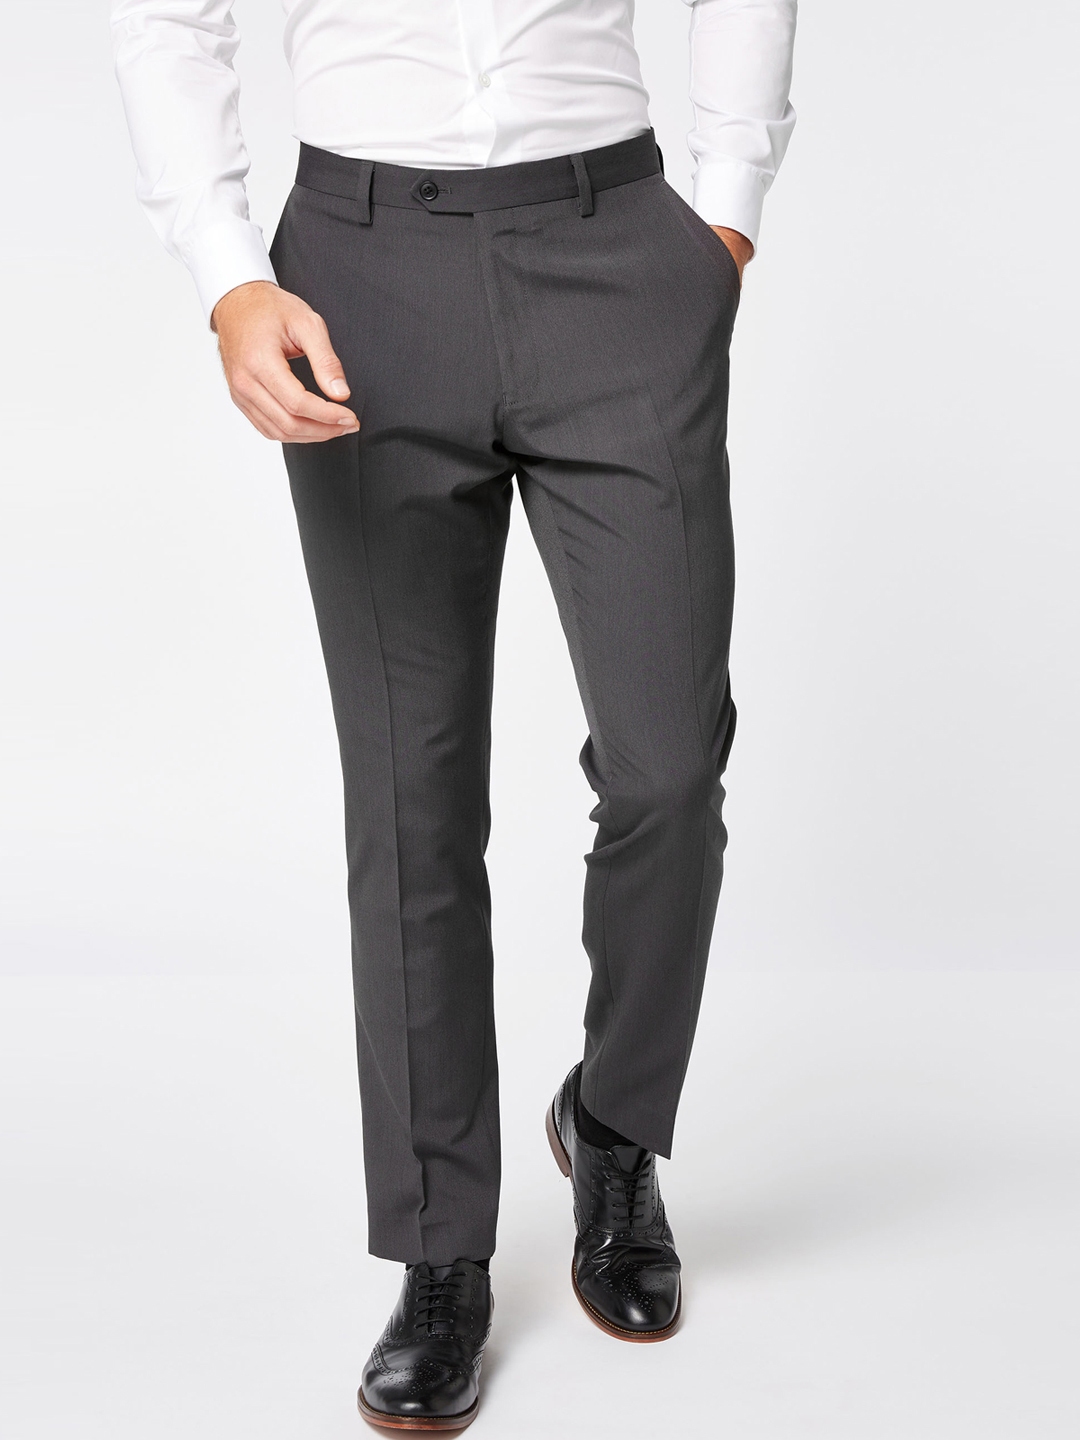 Next Look Slim Fit Men Black Trousers  Buy Next Look Slim Fit Men Black  Trousers Online at Best Prices in India  Flipkartcom